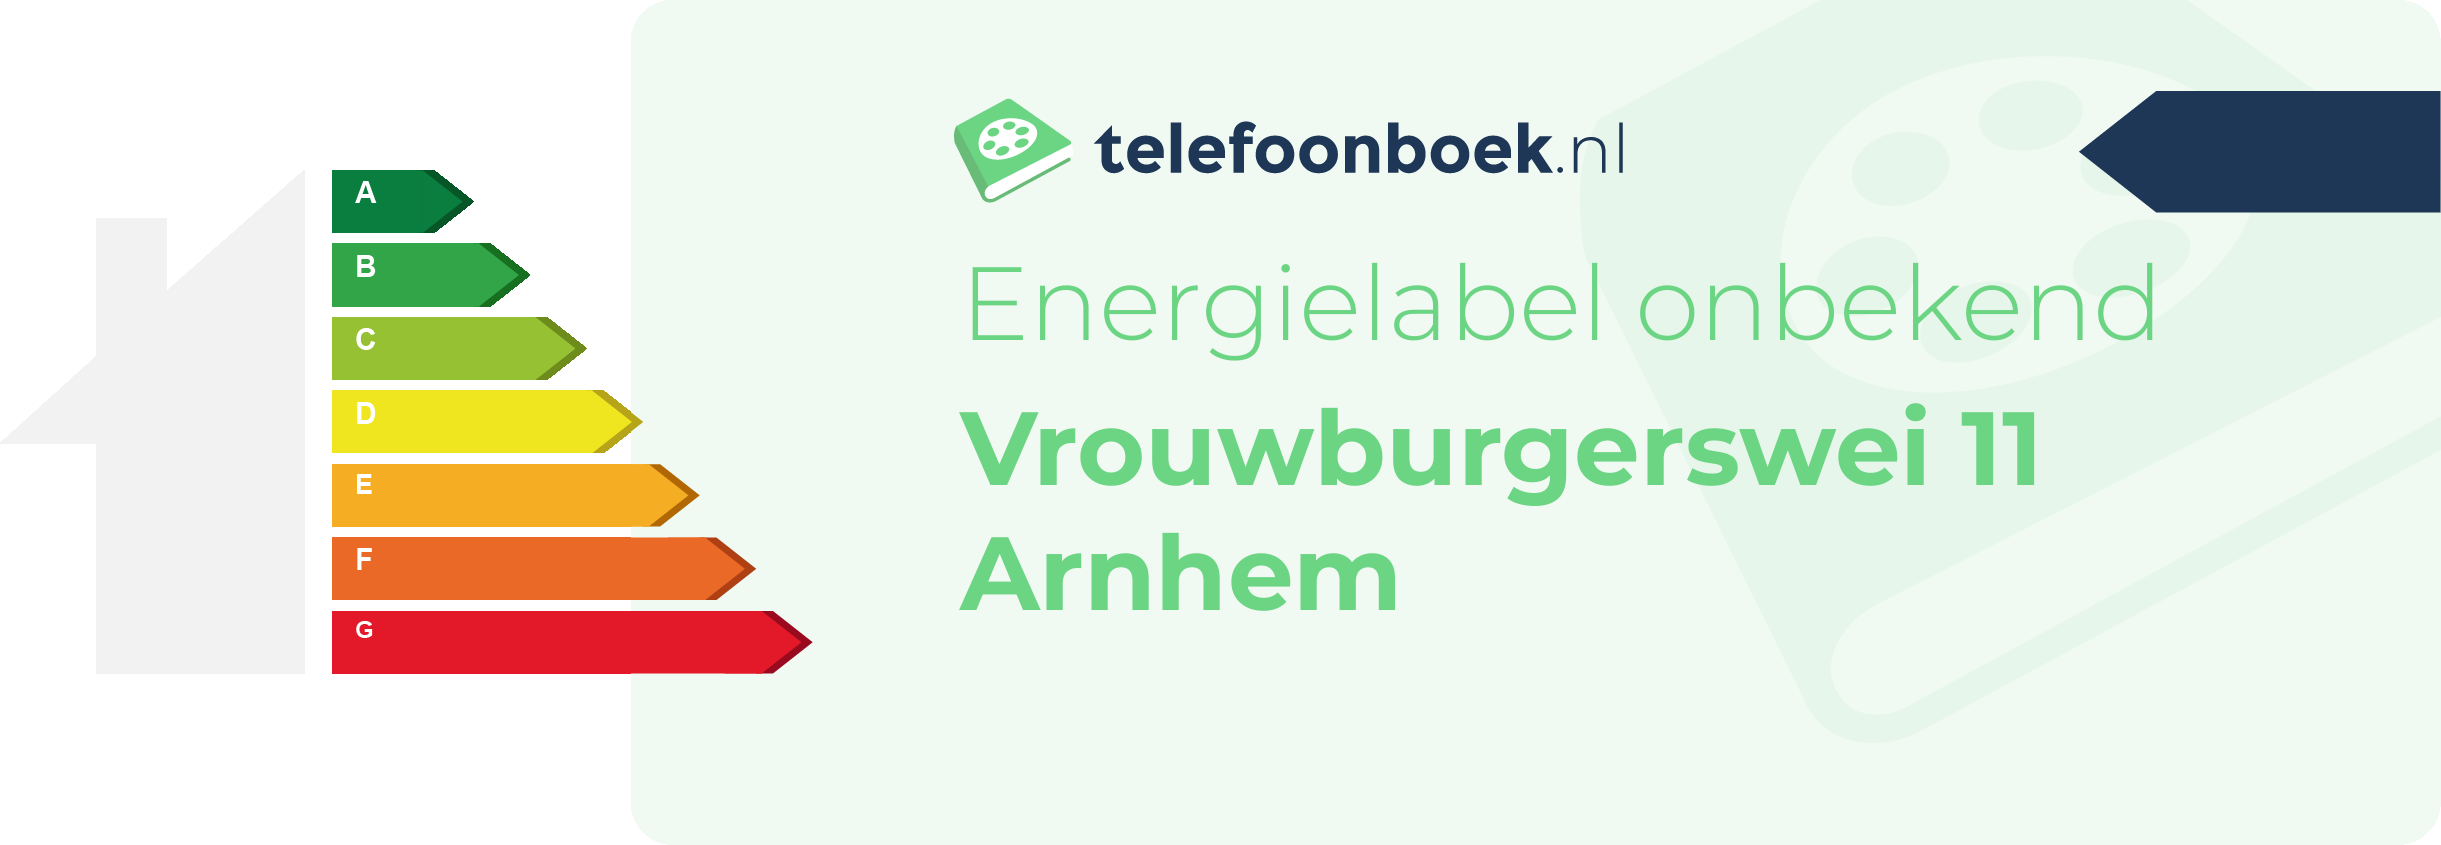 Energielabel Vrouwburgerswei 11 Arnhem